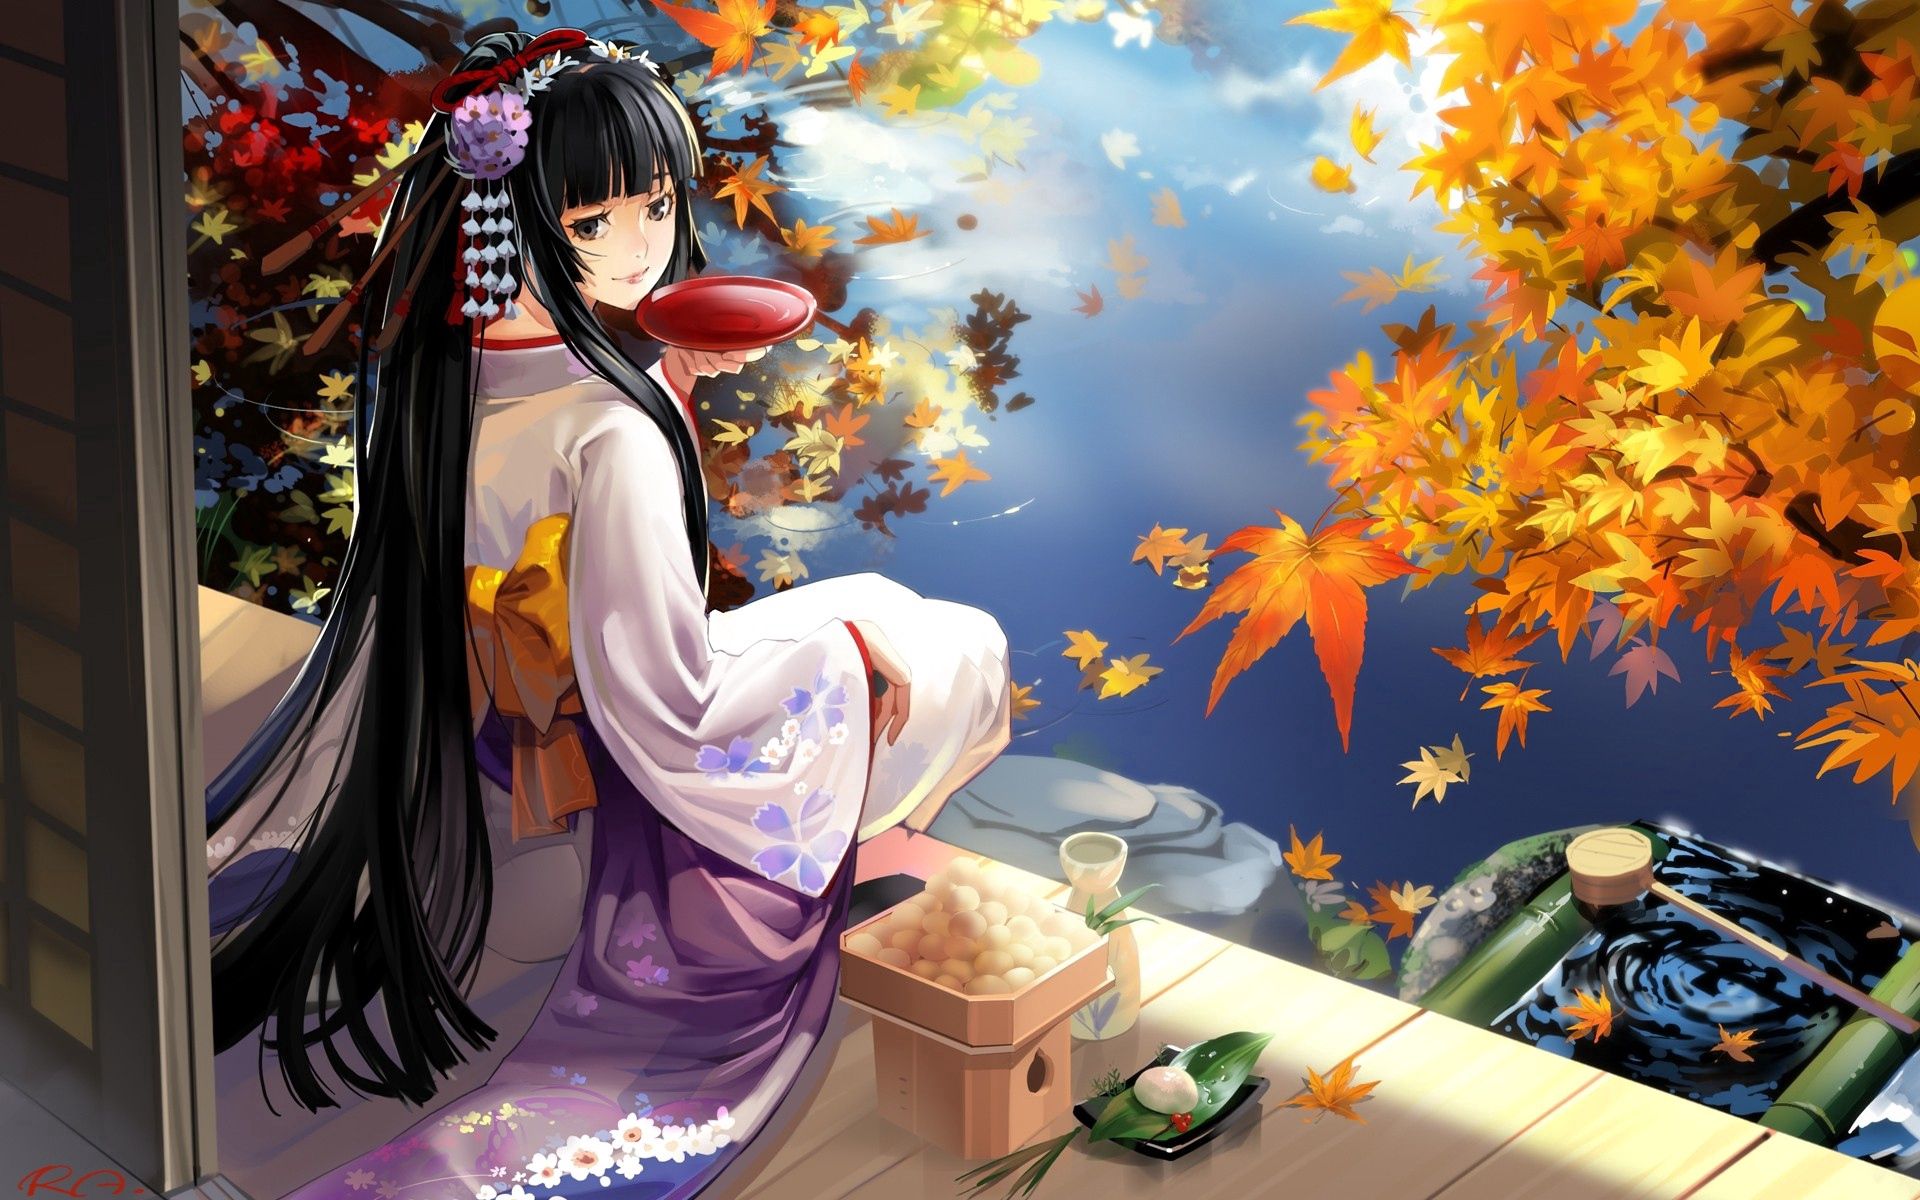 Descarga gratis la imagen Quimono, Geisha, Muchacha, Niña, Kimono, Anime en el escritorio de tu PC